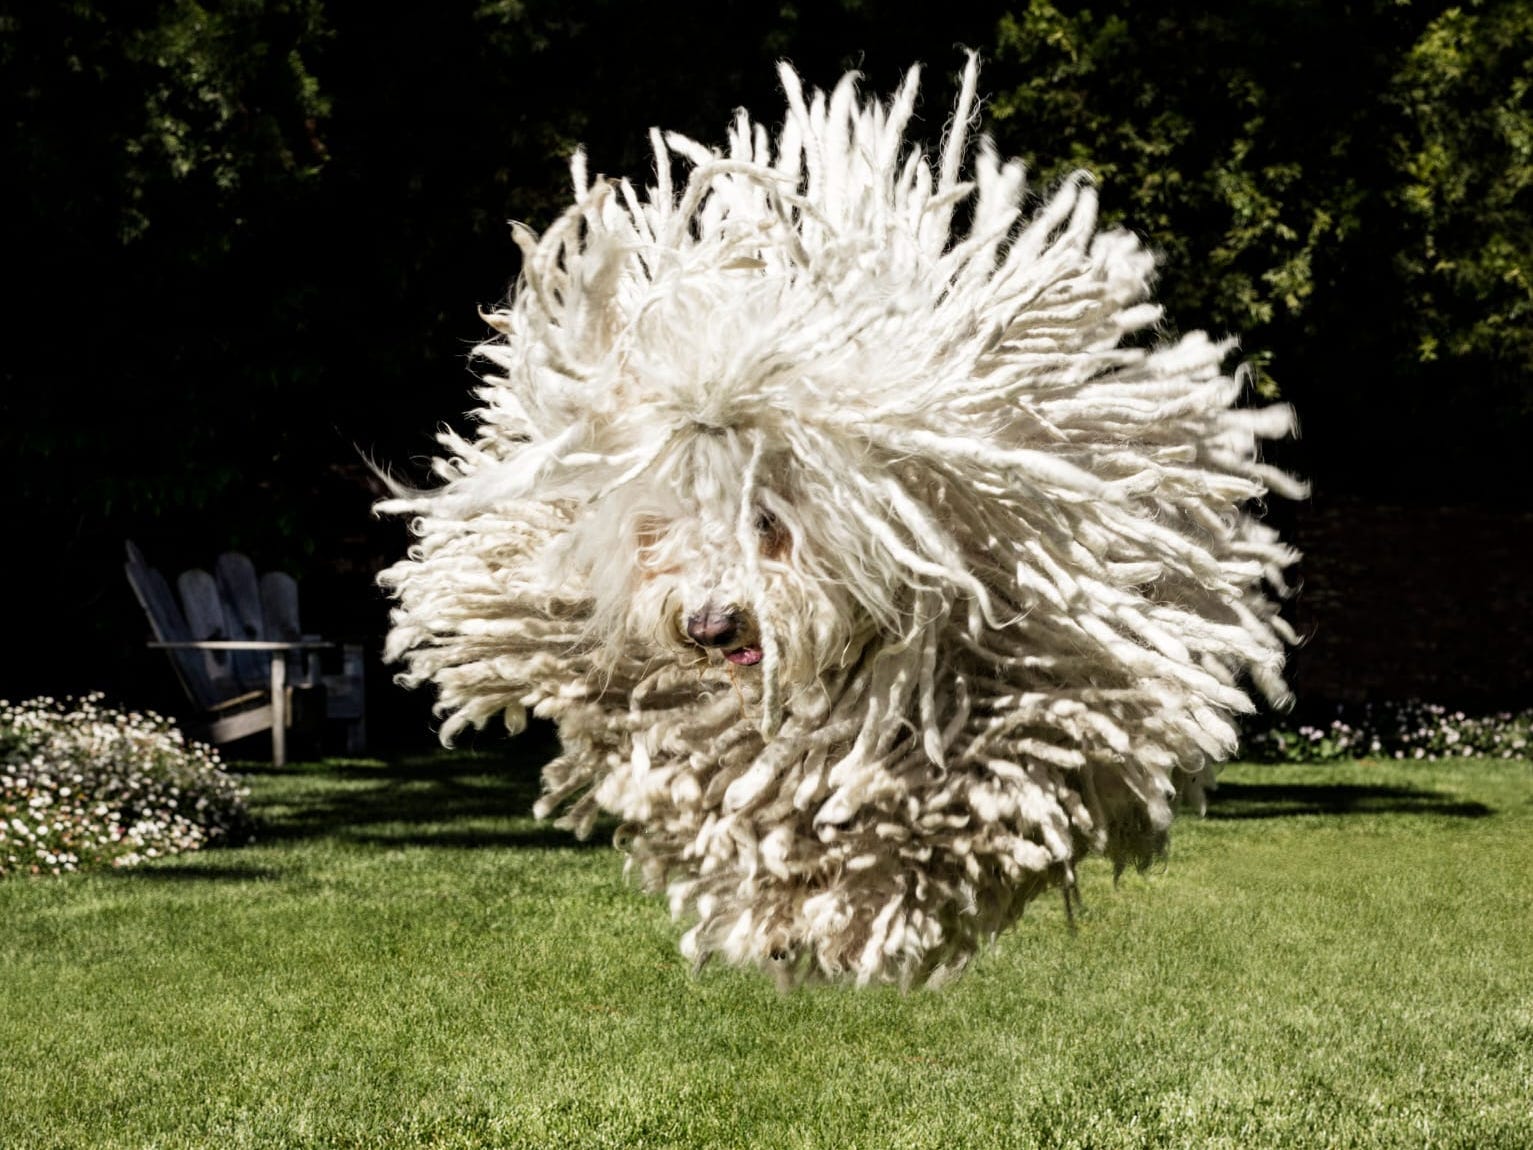 Mark Zuckerberg's dog, Beast, mid-jump